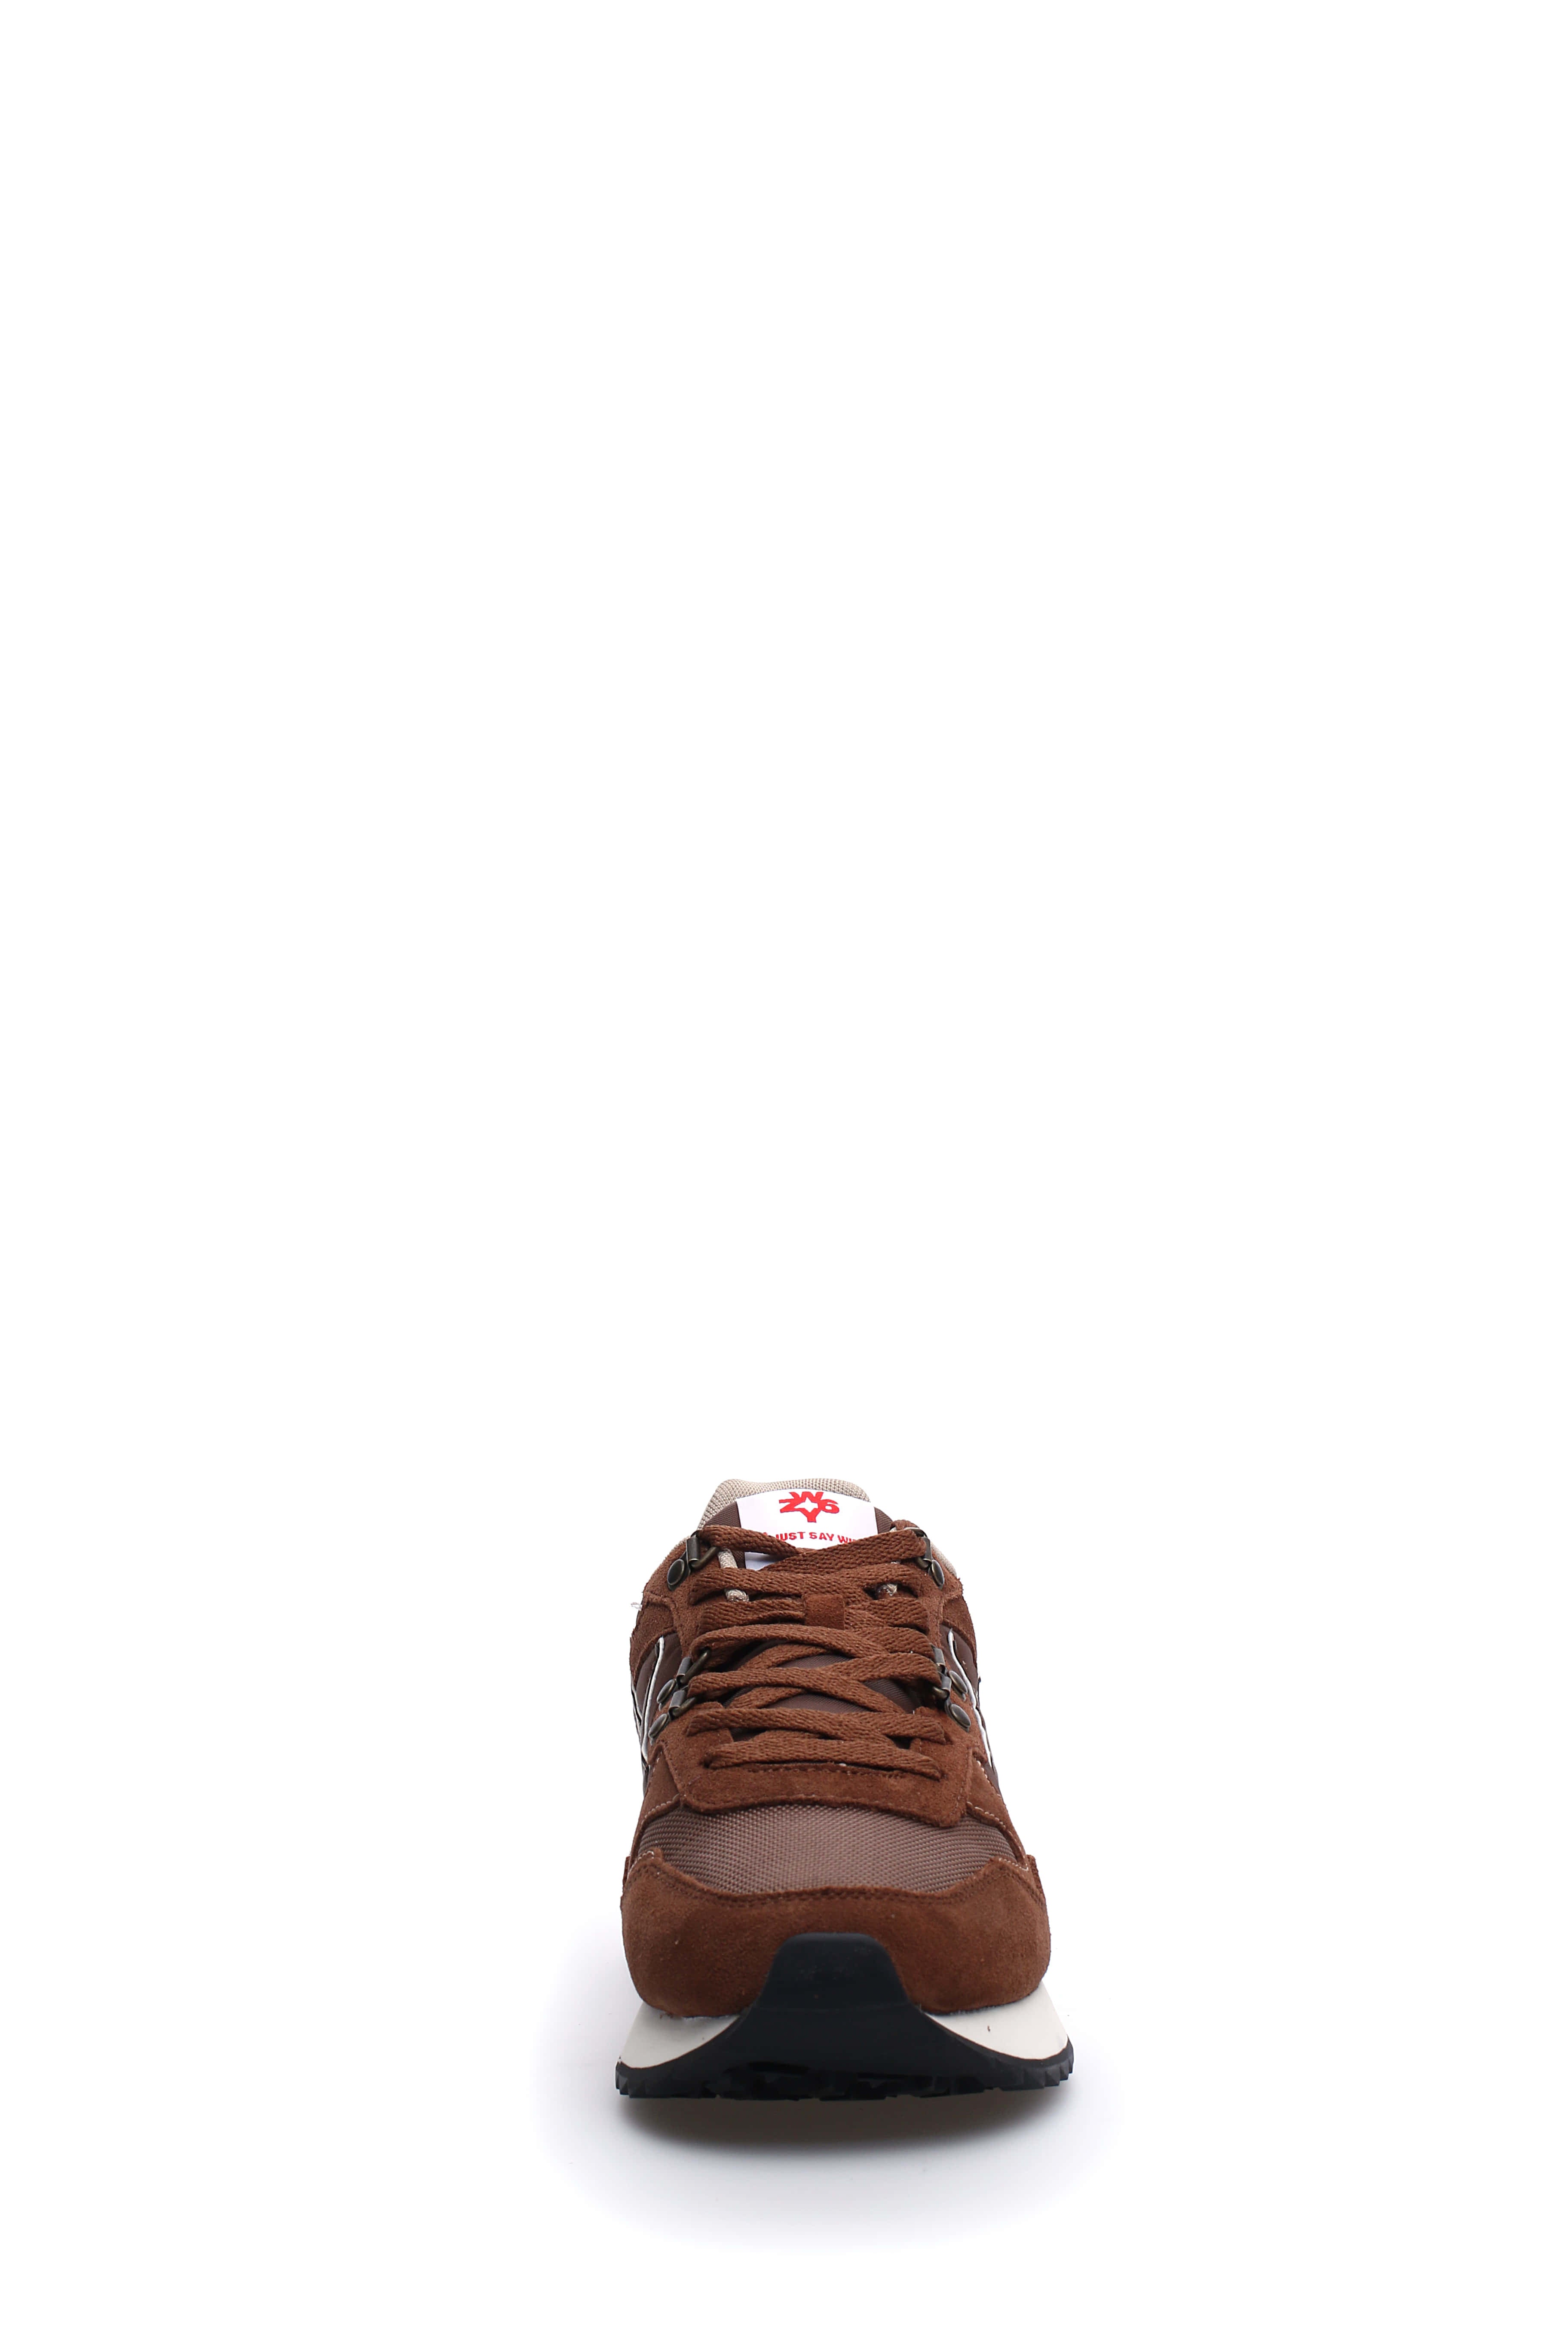 W6yz Sneakers Uomo 2015185 07 Marrone